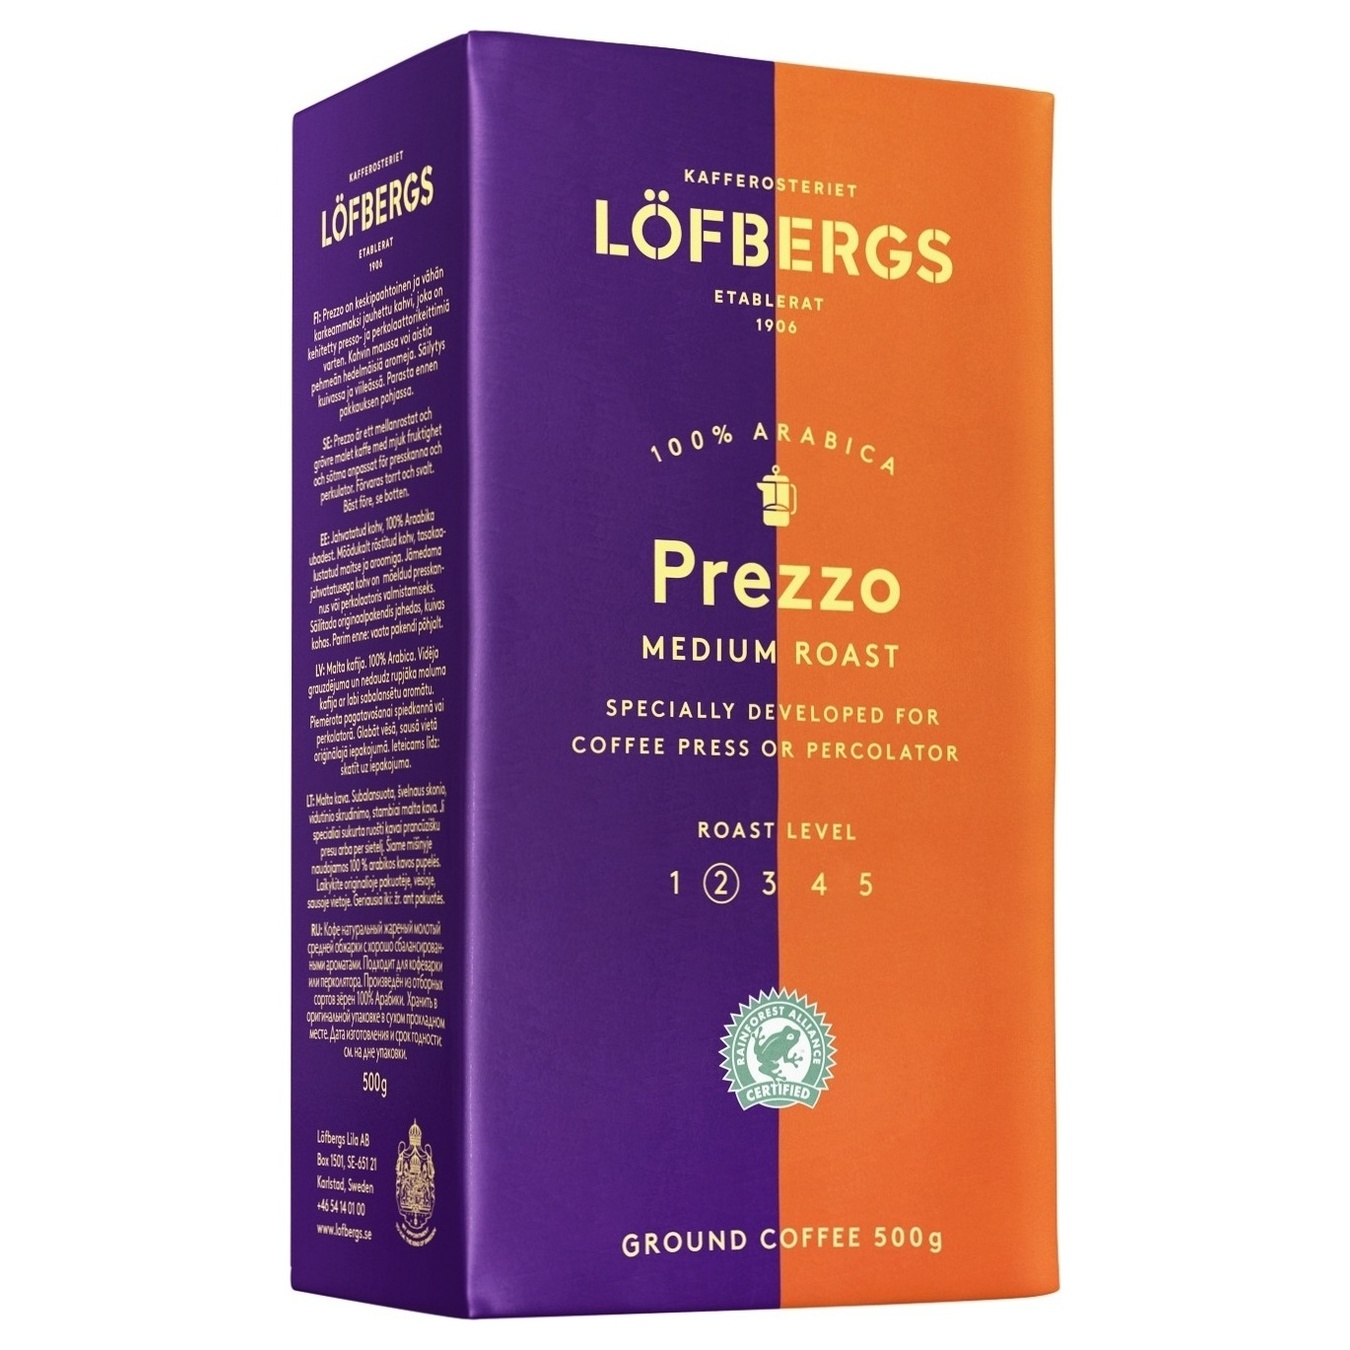 Lofbergs Prezzo ground coffee 500g